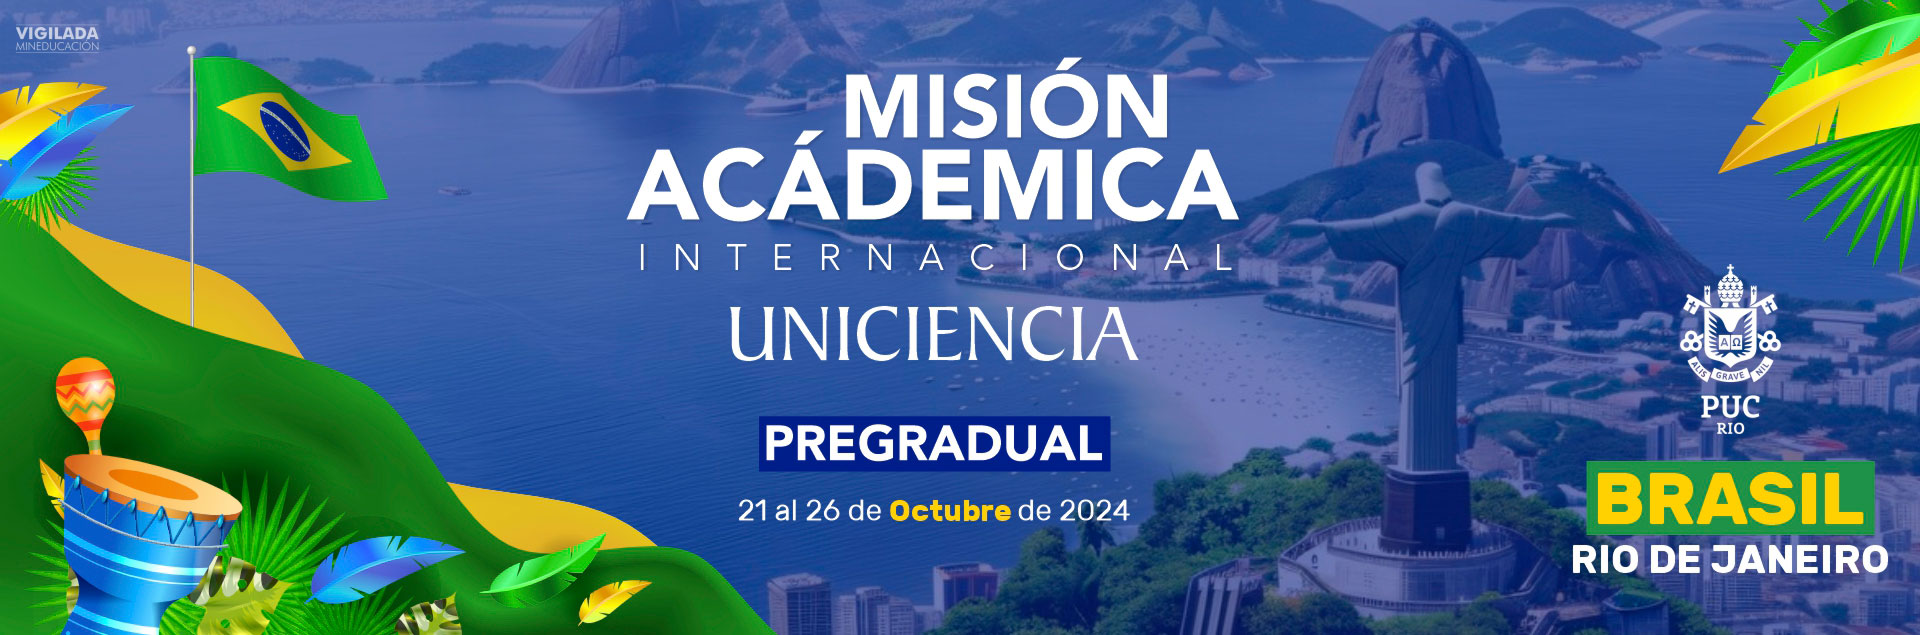 Misión académica Brasil 2024 - UNICIENCIA